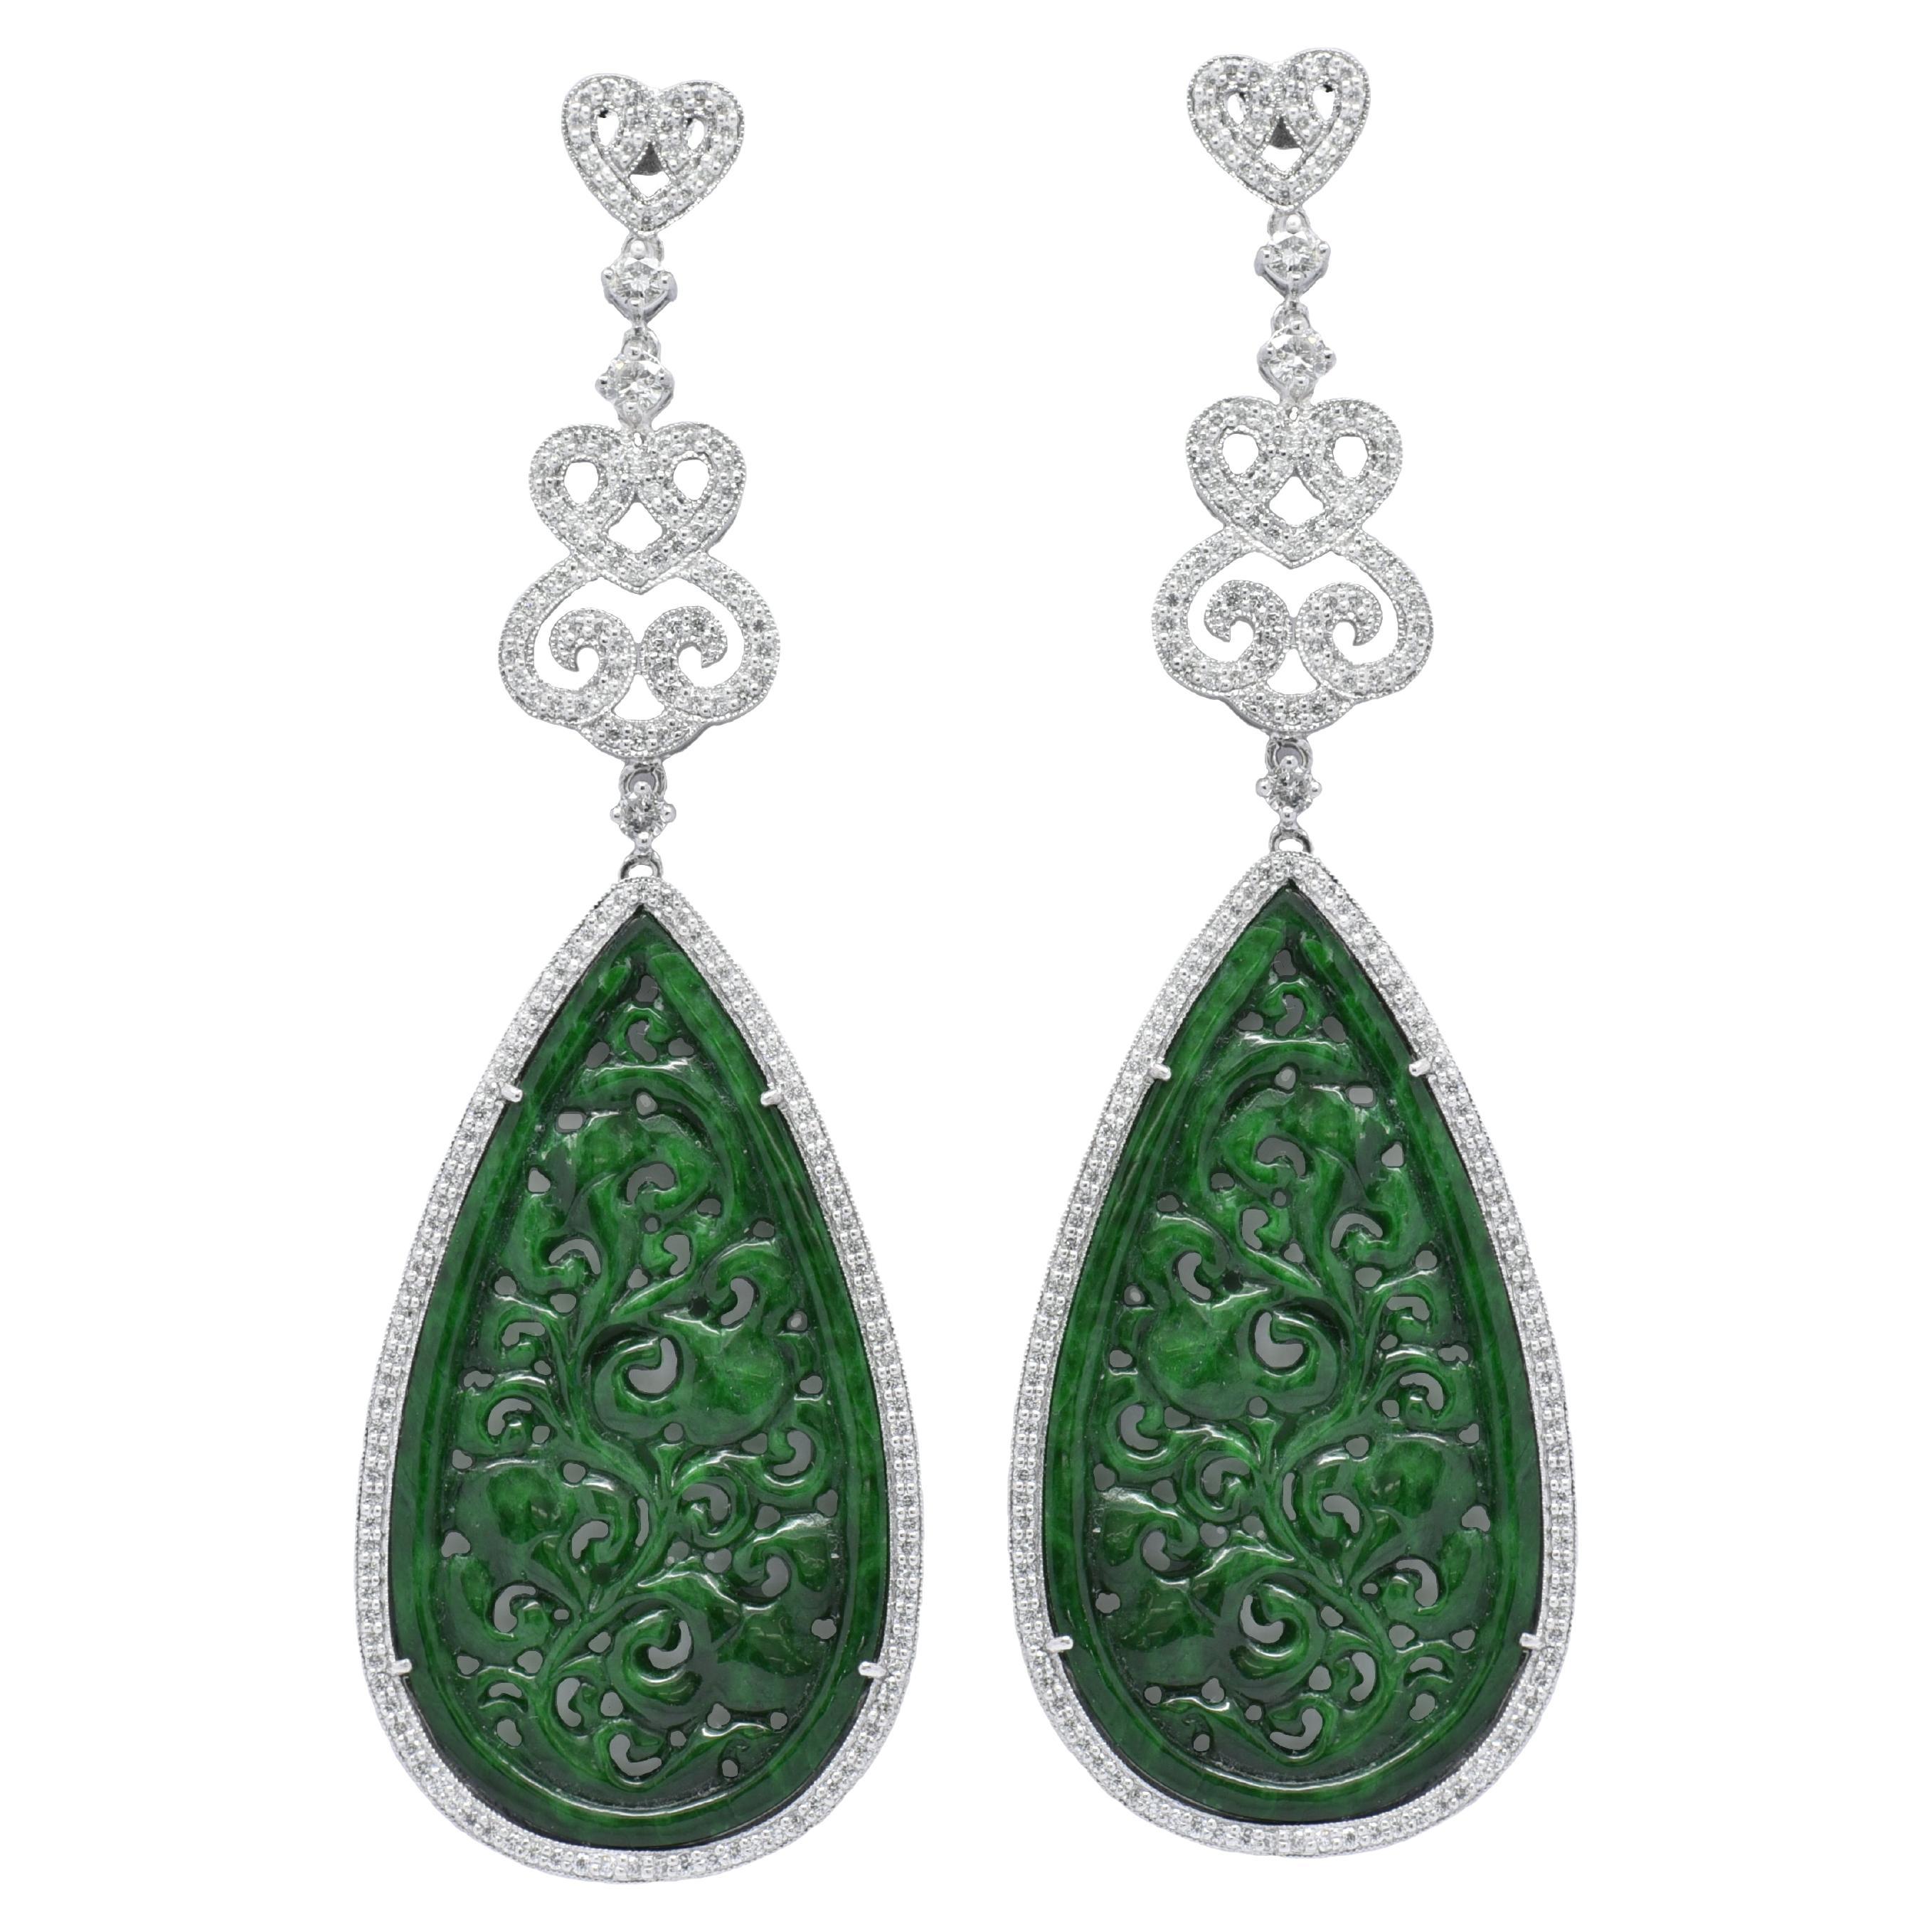 Sophia D. 22.51 Carat Jade and Diamond Earrings